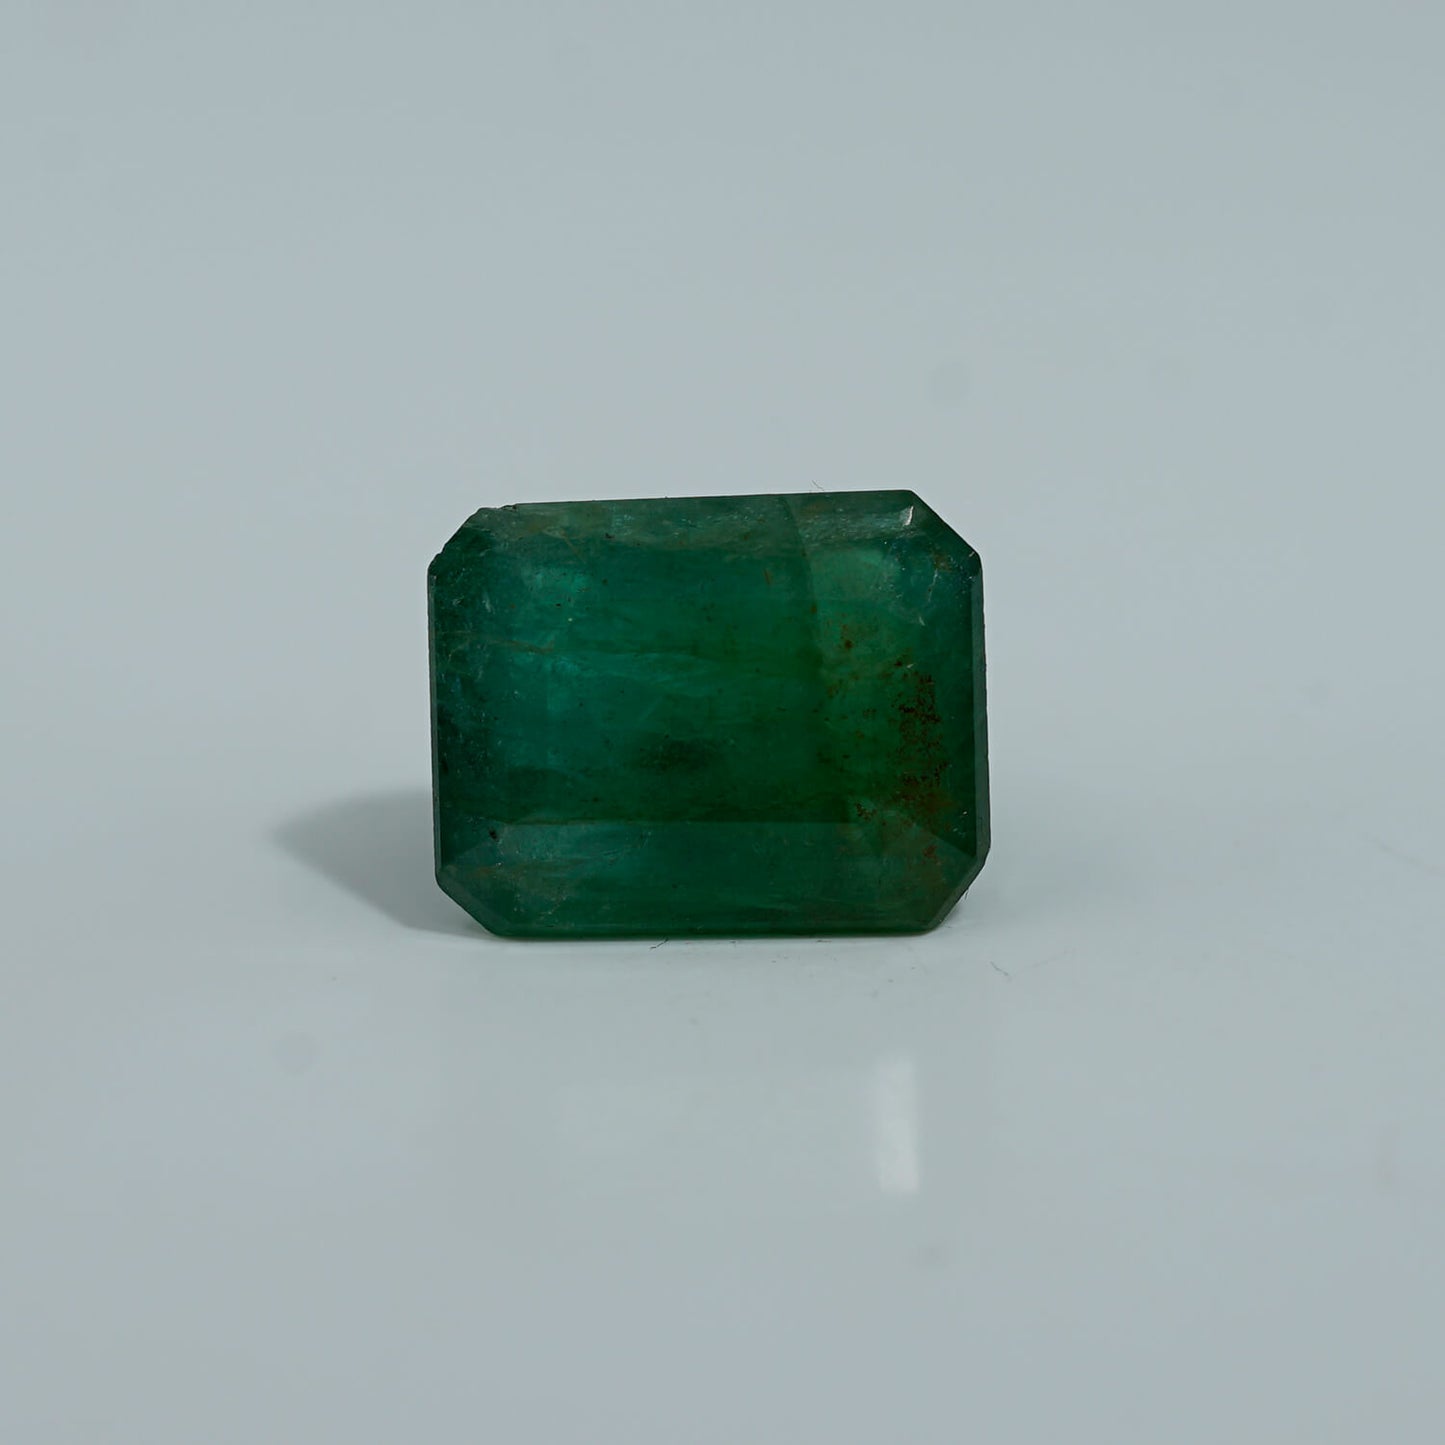 Vedic crystals Zambian Emerald gemstone (Panna nag) best price image 245